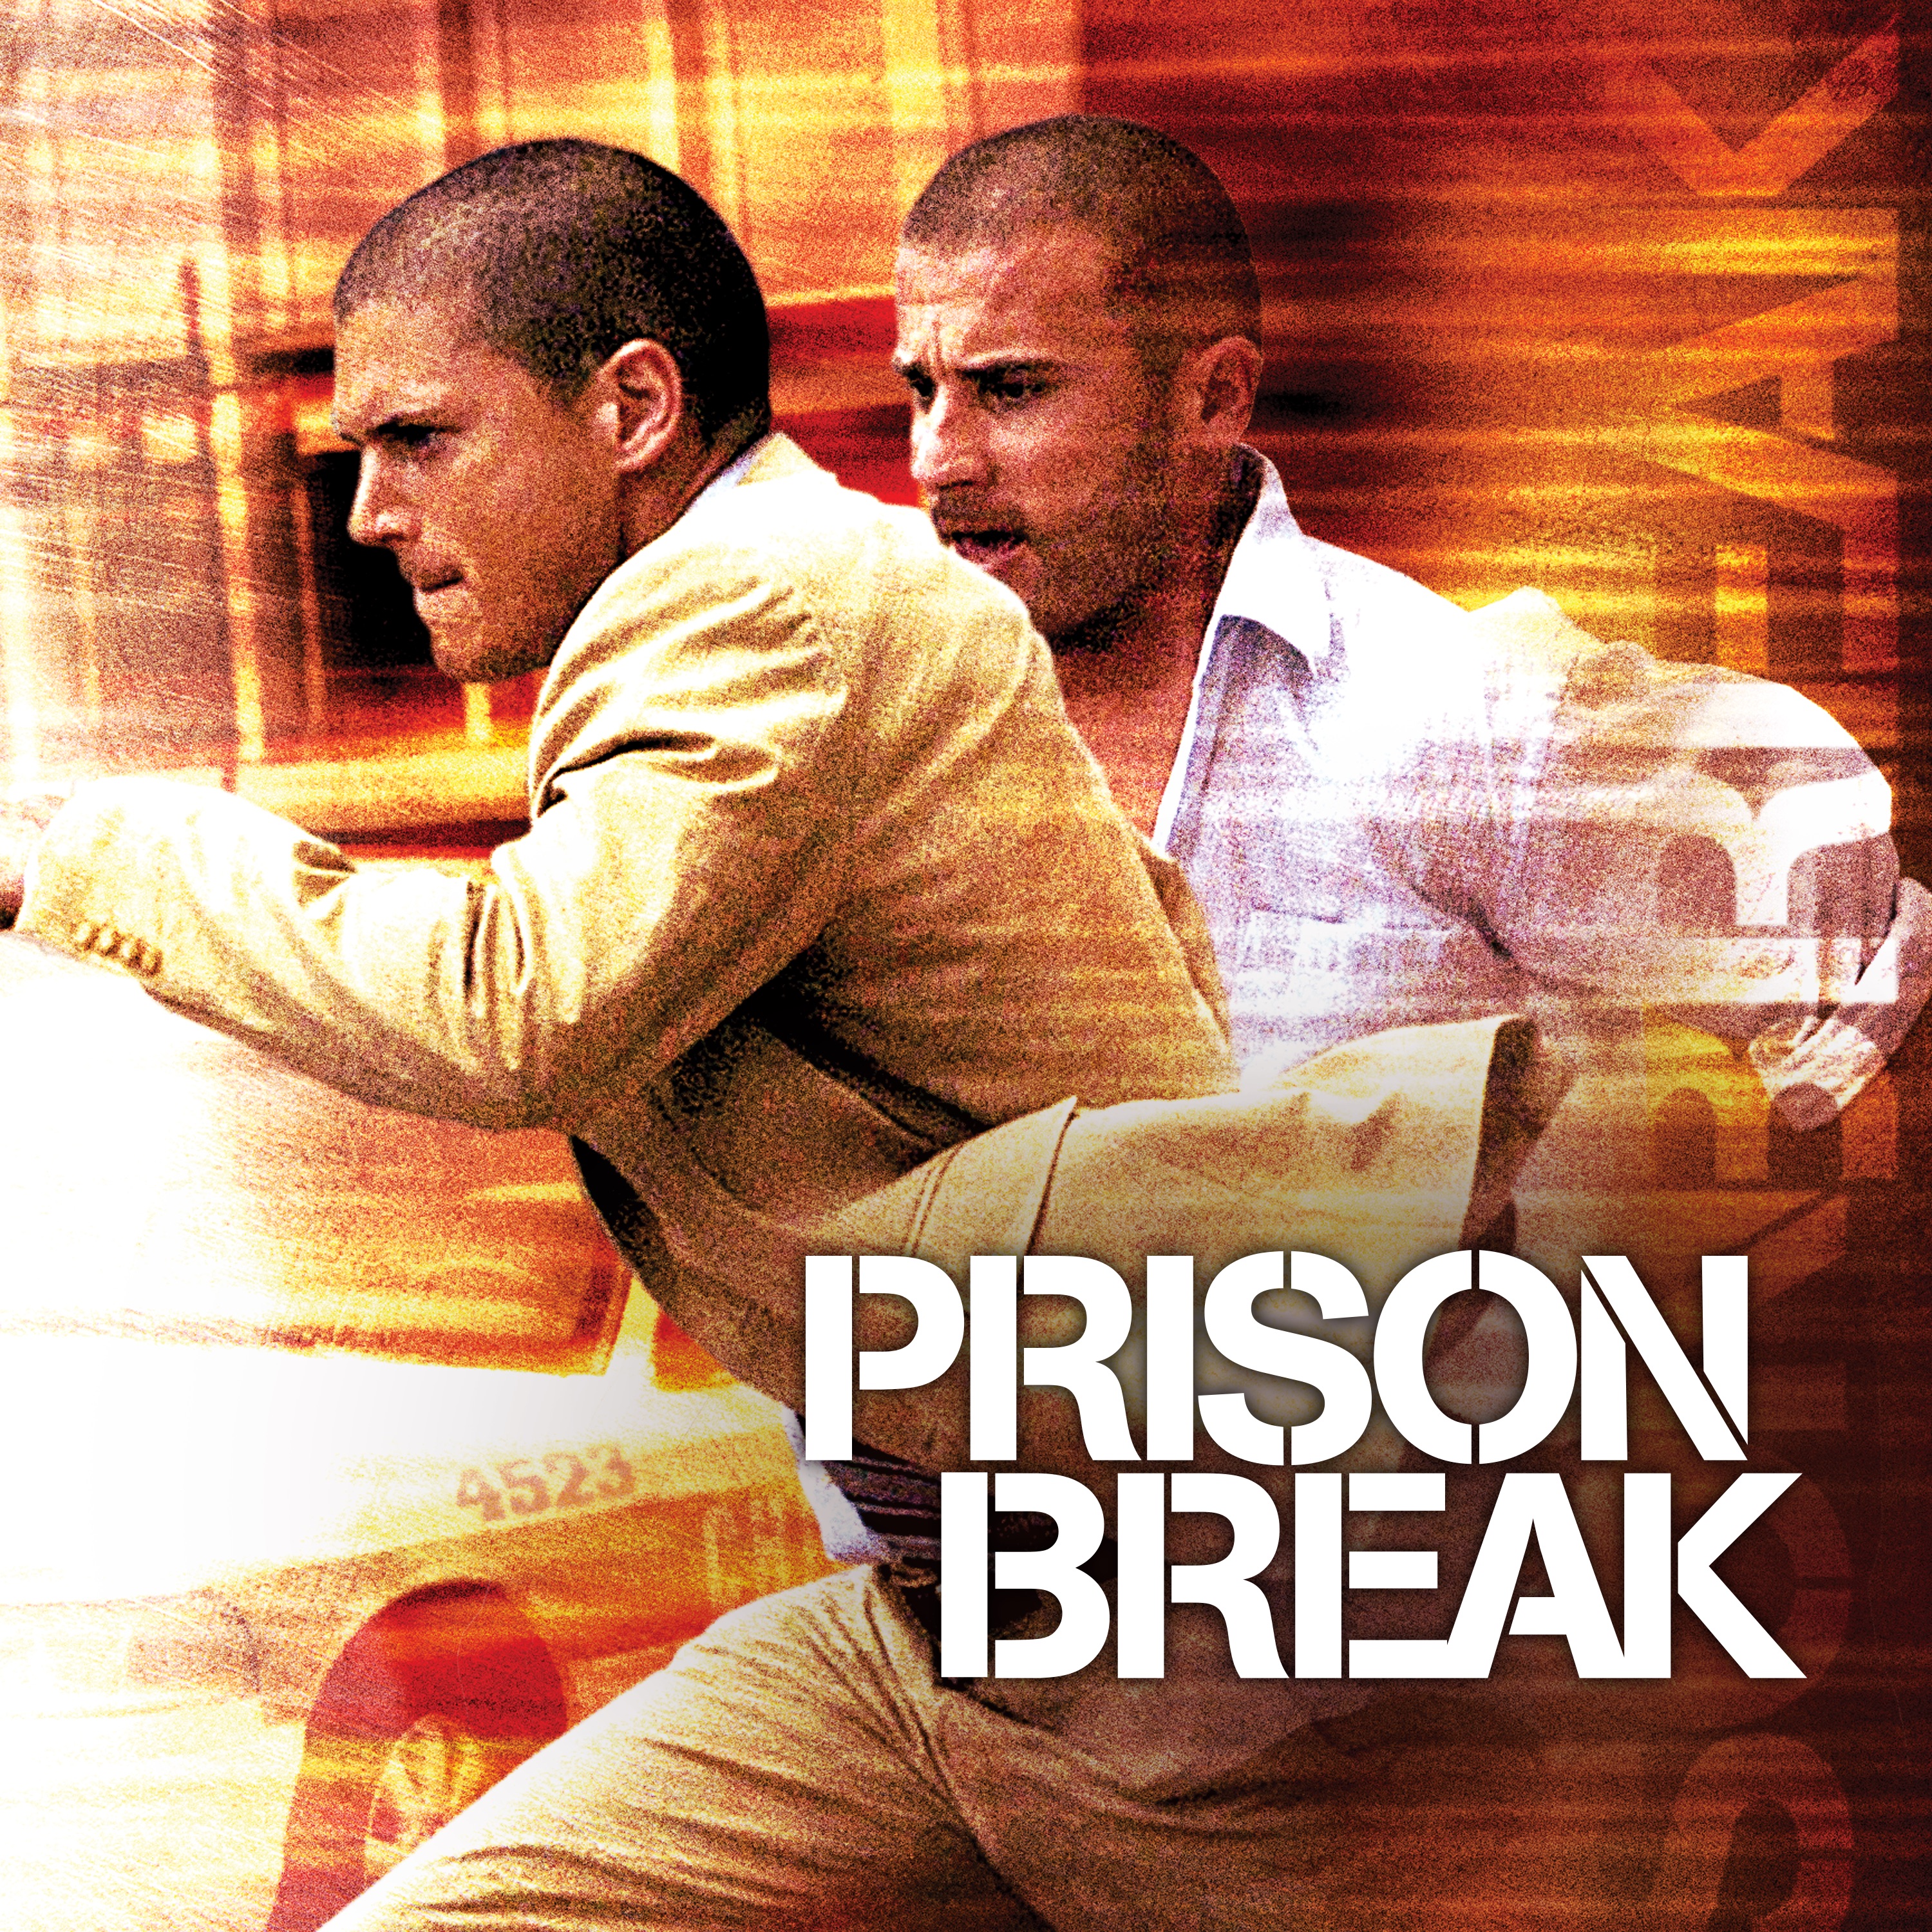 prison break season 5 torrent download kickass